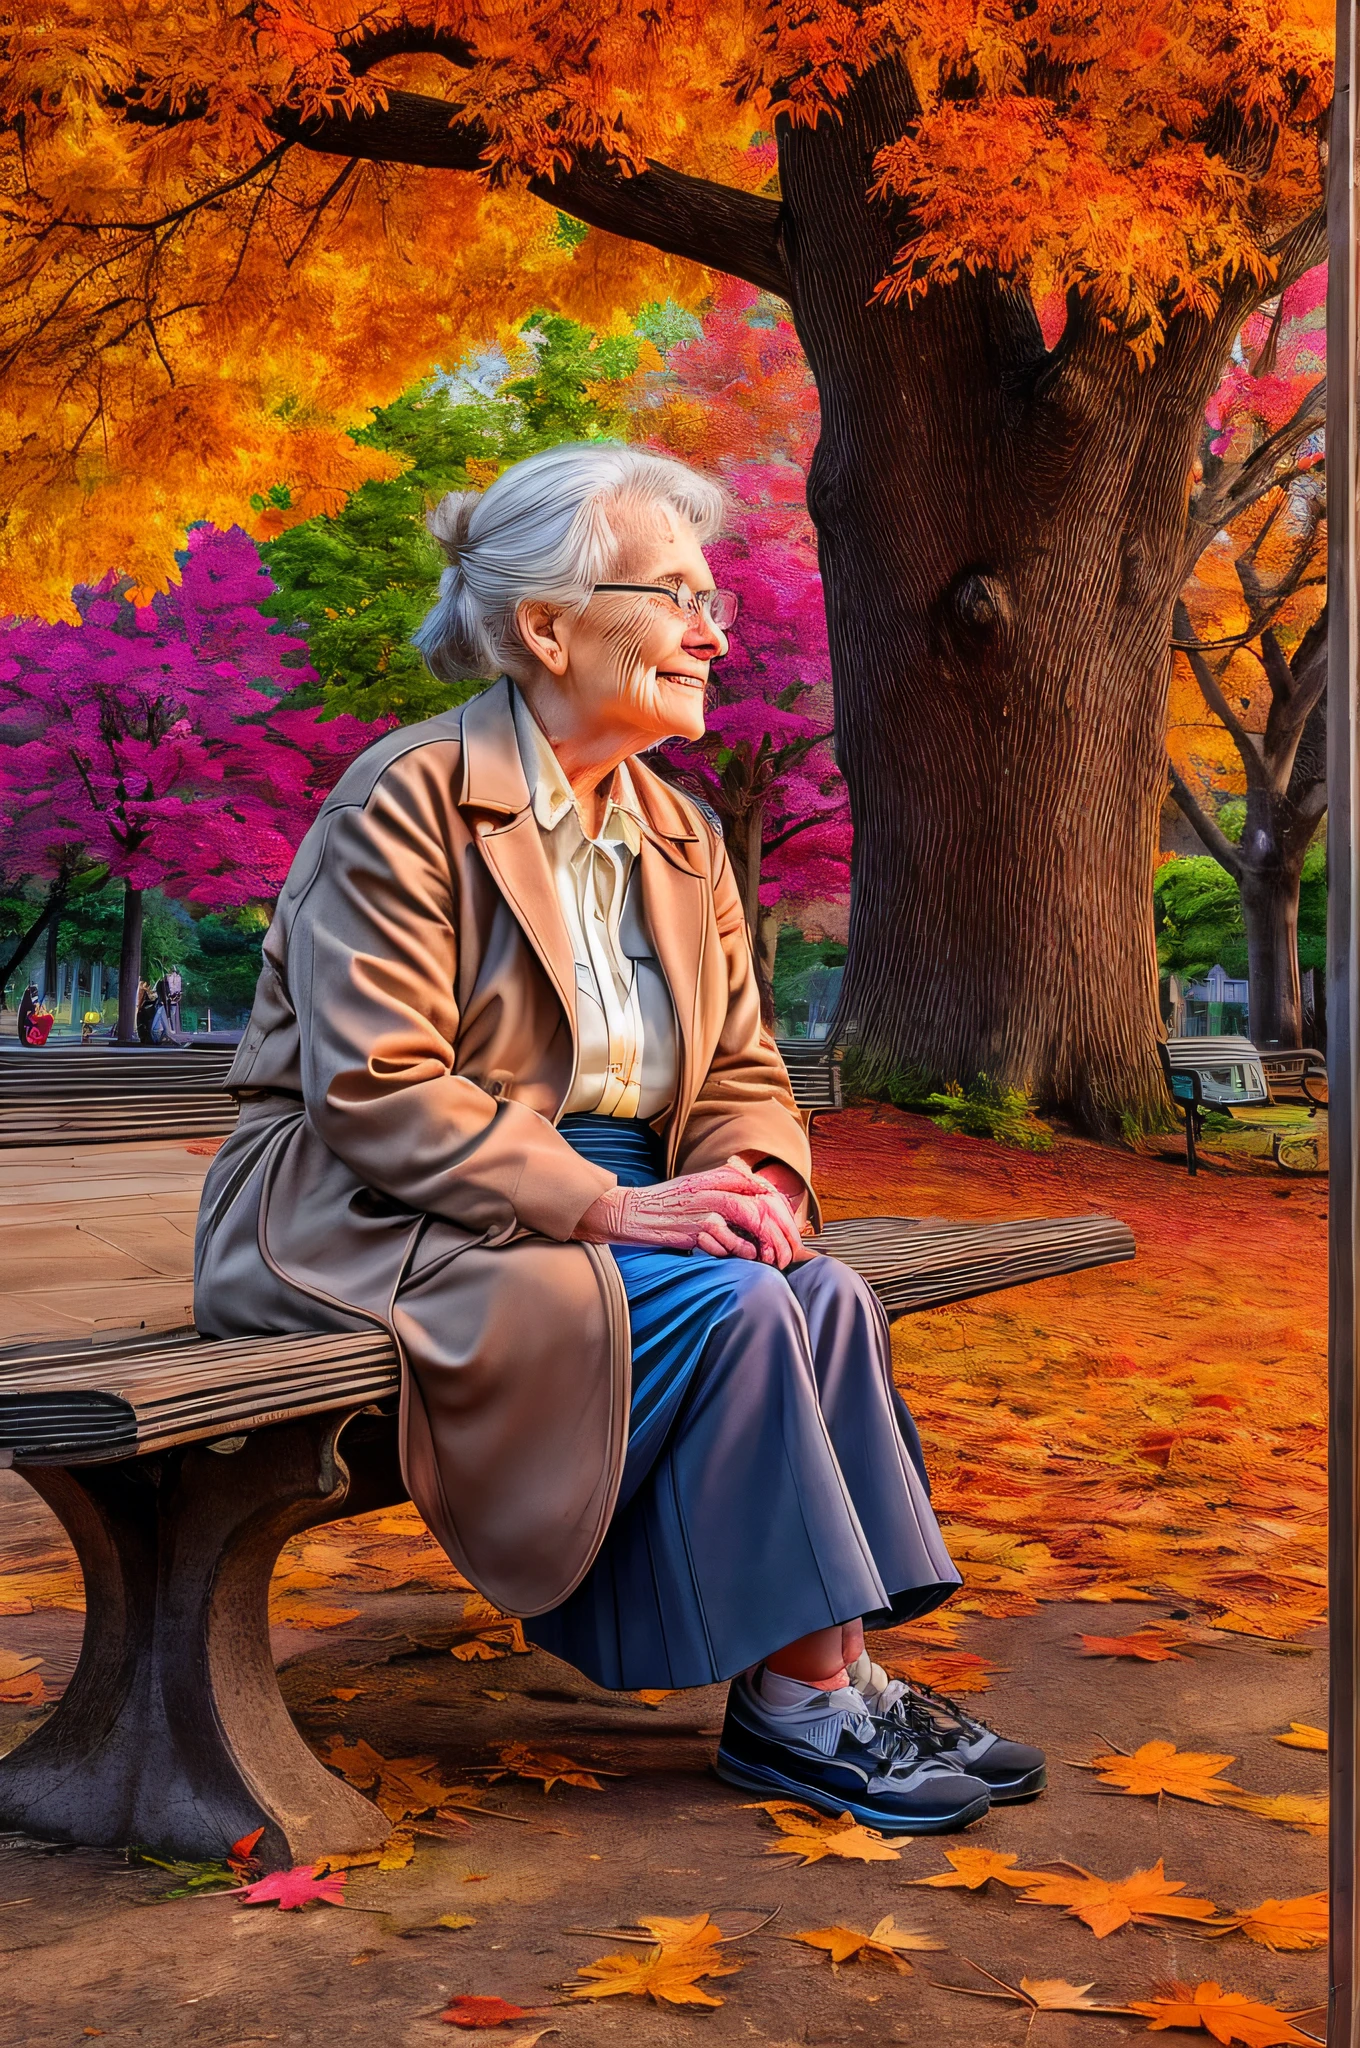 picture of 一位老妇人 坐在长凳上 in the park under the maple tree in a park at autumn, 一位老妇人, 看起来很杰出, 头发花白, 良好, 蓝色的, 眼睛, 眼睛 that had good life, 历史生活, 穿着绿色的裙子, 和白色衬衫, 活力鞋, 坐在长凳上, 拐杖就放在旁边的长凳上, 秋天的枫树下, 许多红色的叶子, 橙色和眉毛, 全谱, 鲜艳的色彩, 太阳落山, 晚上, 城市公园背景, 最好的质量, 16千, [极其详细], 杰作, 最好的质量, (极其详细), 全身, 超广角拍摄, 真实感